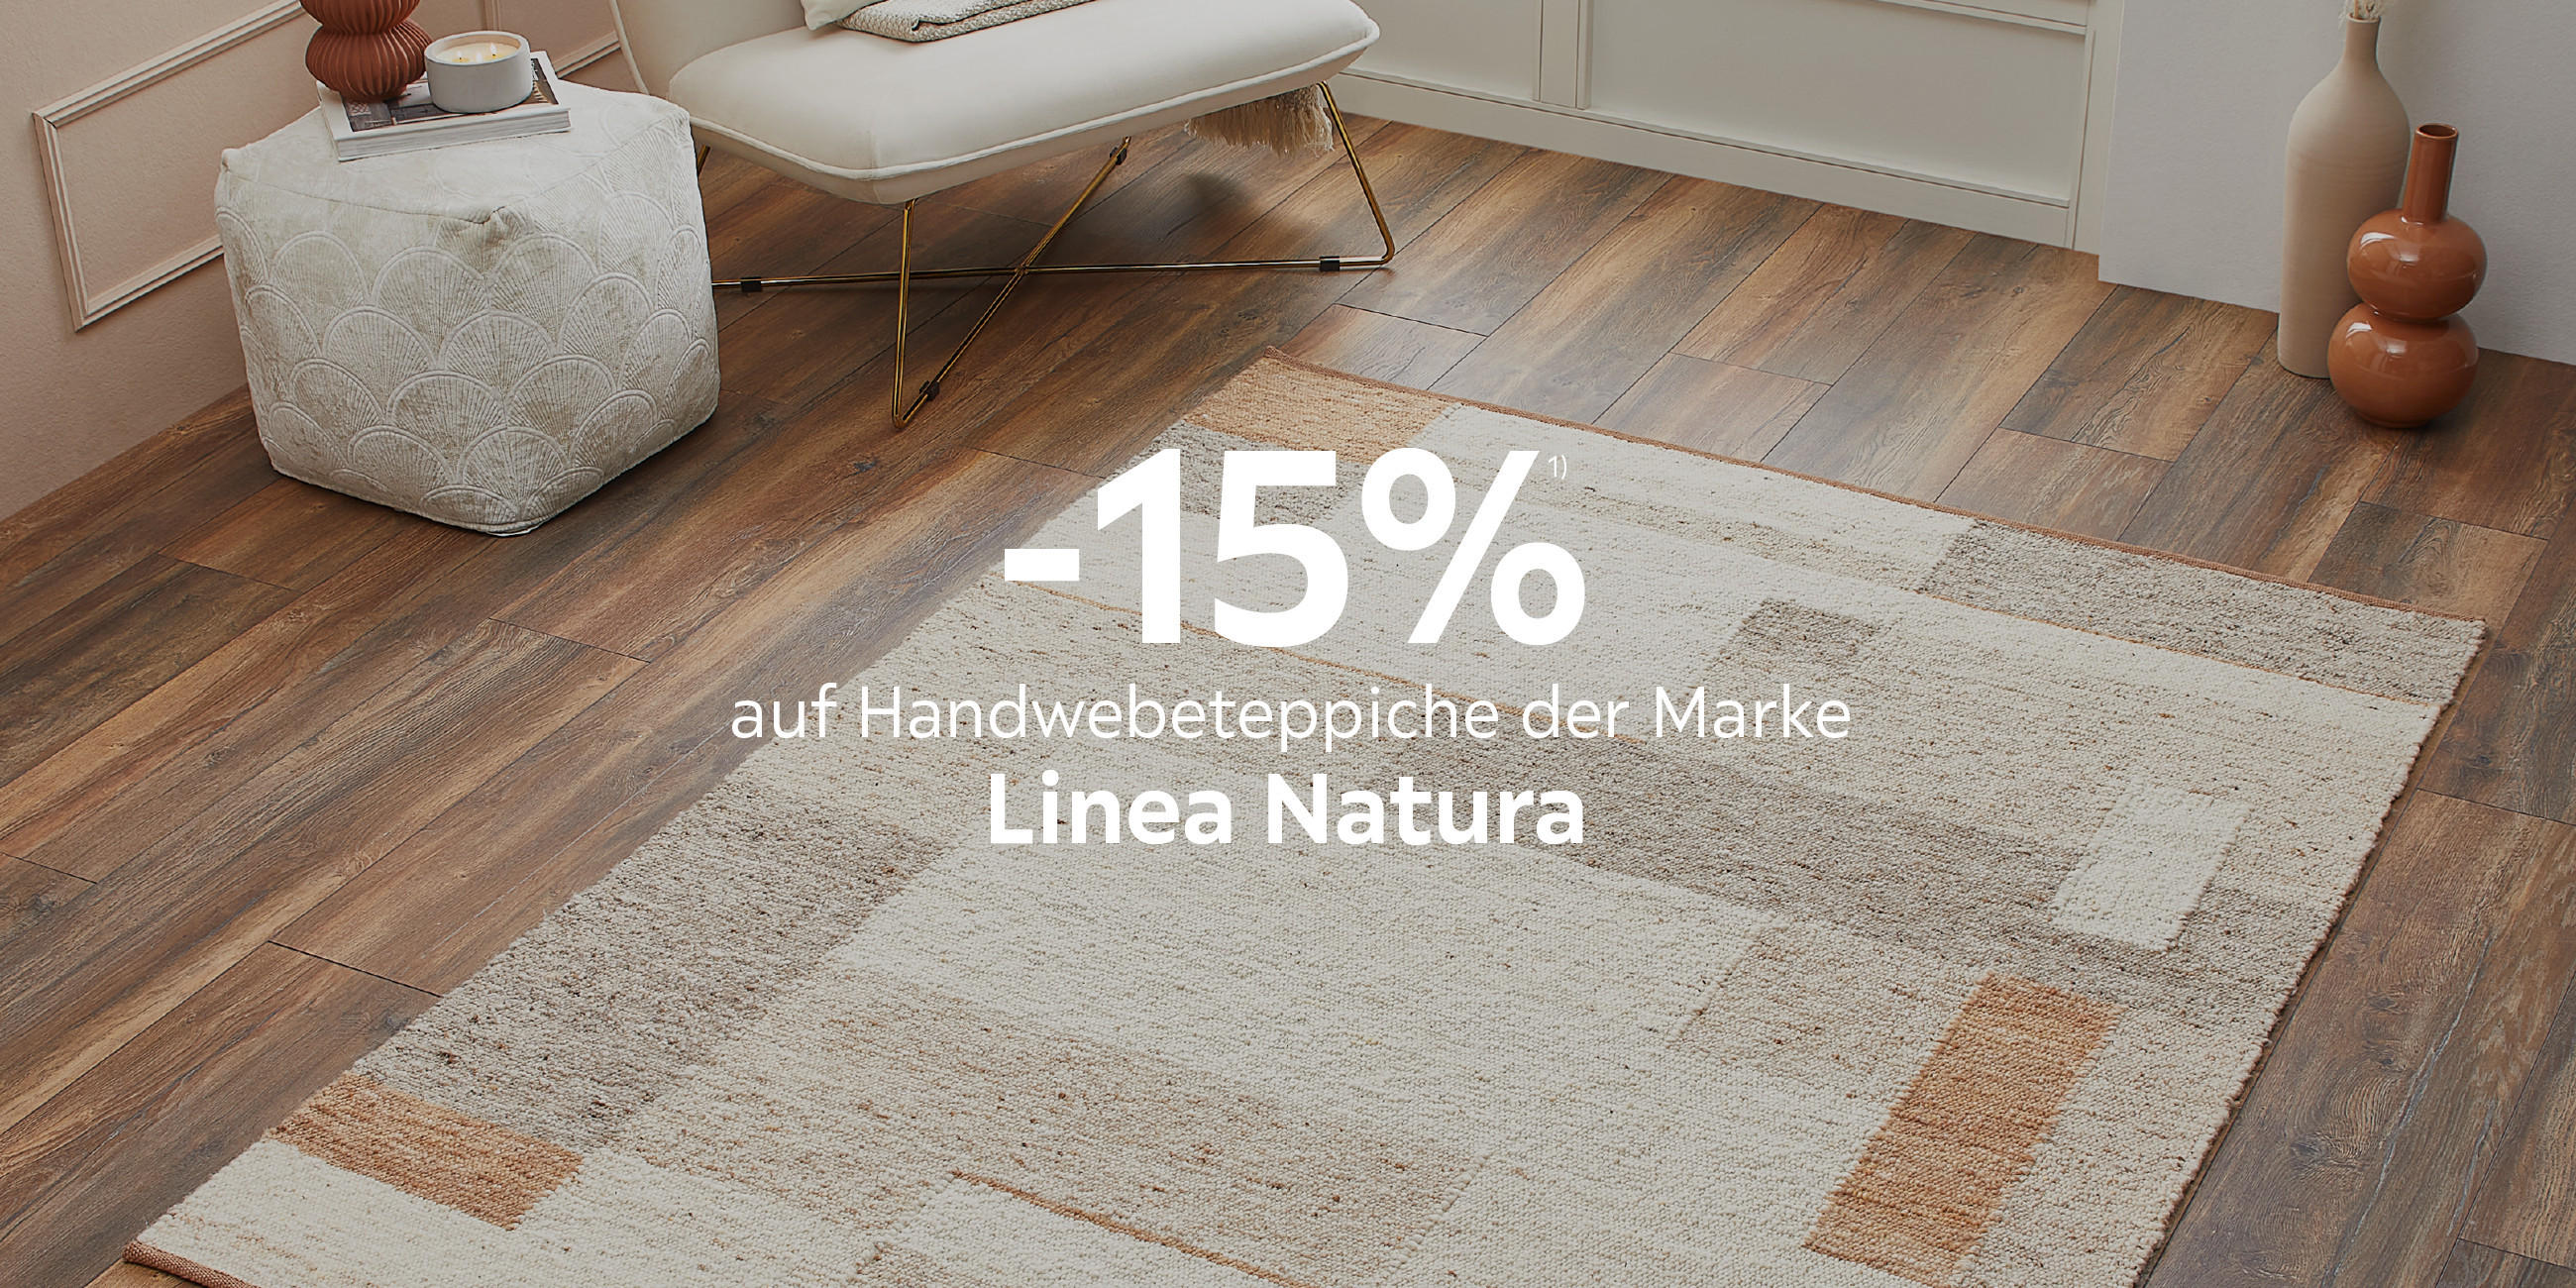 Markenteaser_Linea Natura_15%rabatt